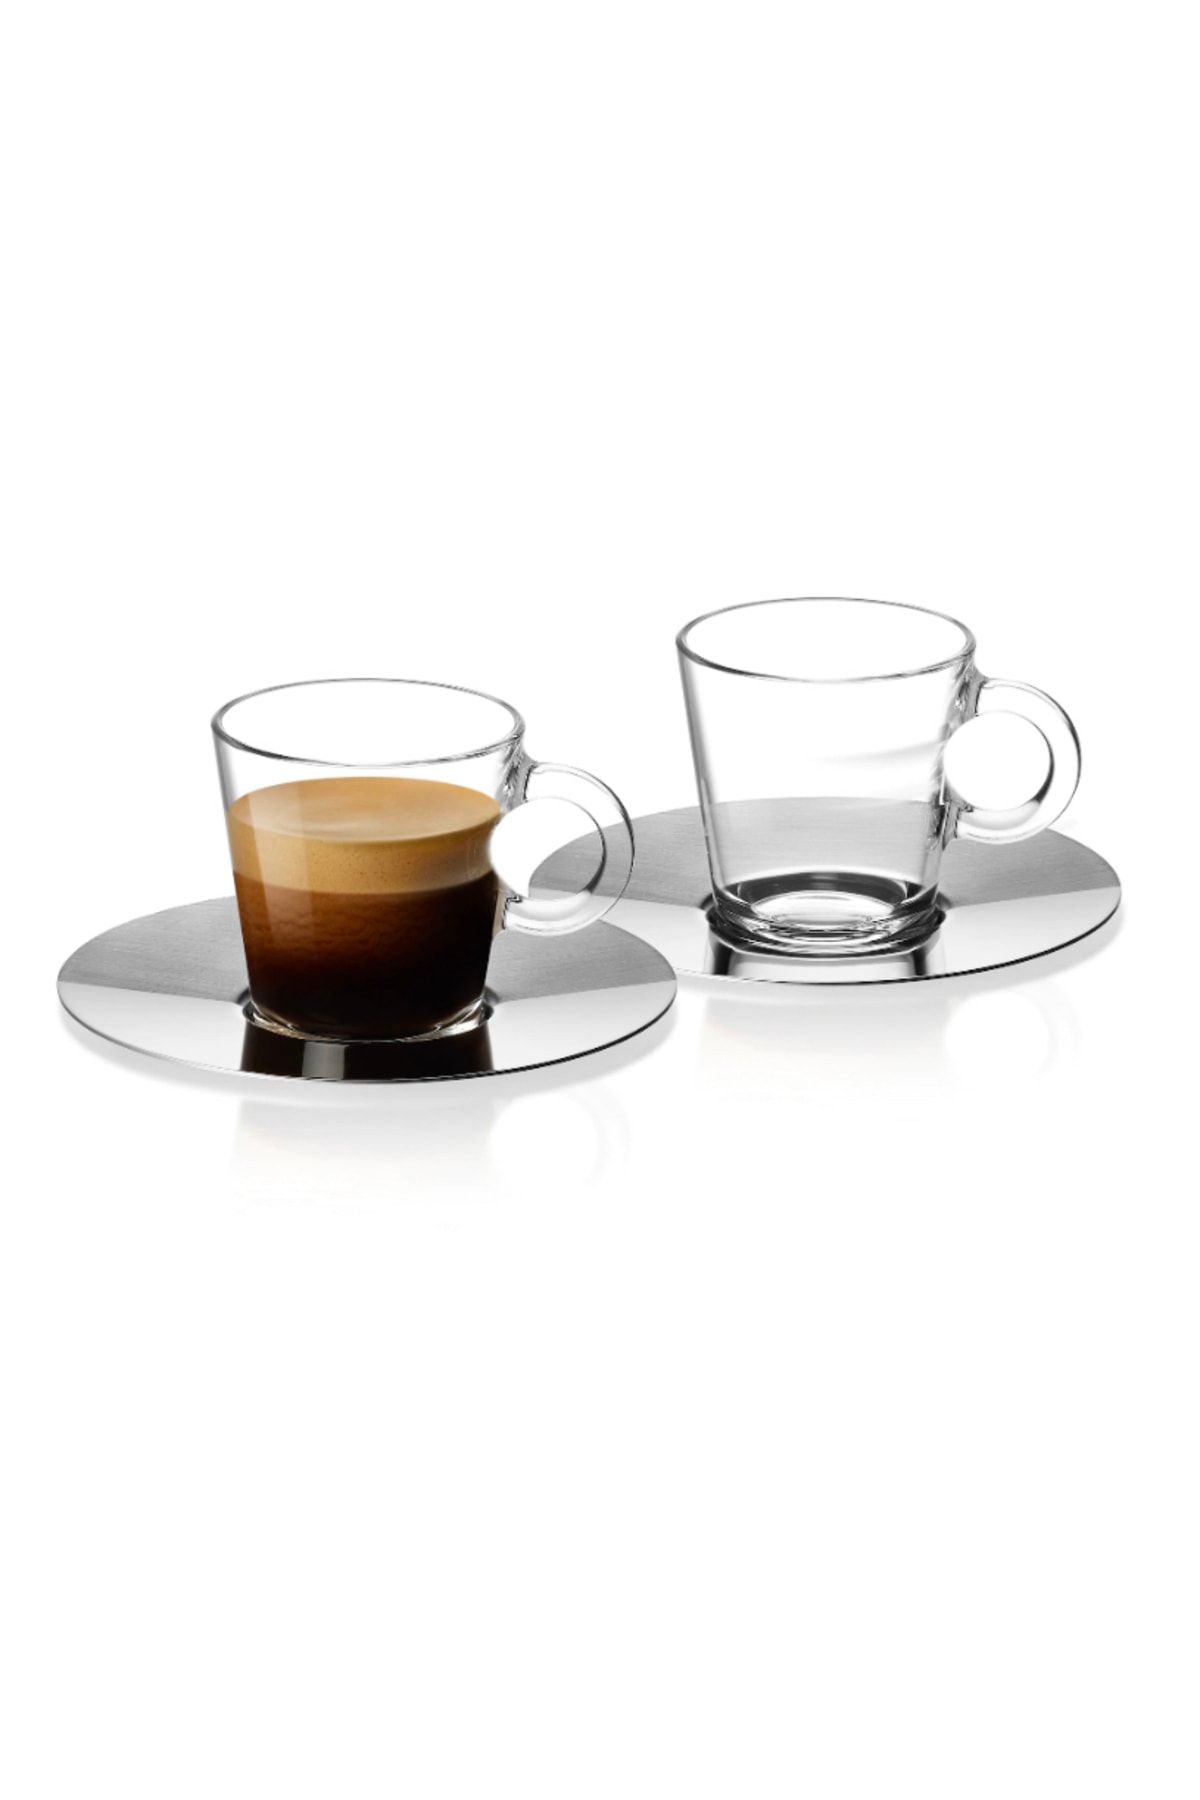 2 эспрессо. Набор чашек view lungo. Кофейная чашка Nespresso lungo. Кофейная пара неспрессо. Чашки Nespresso упаковка.